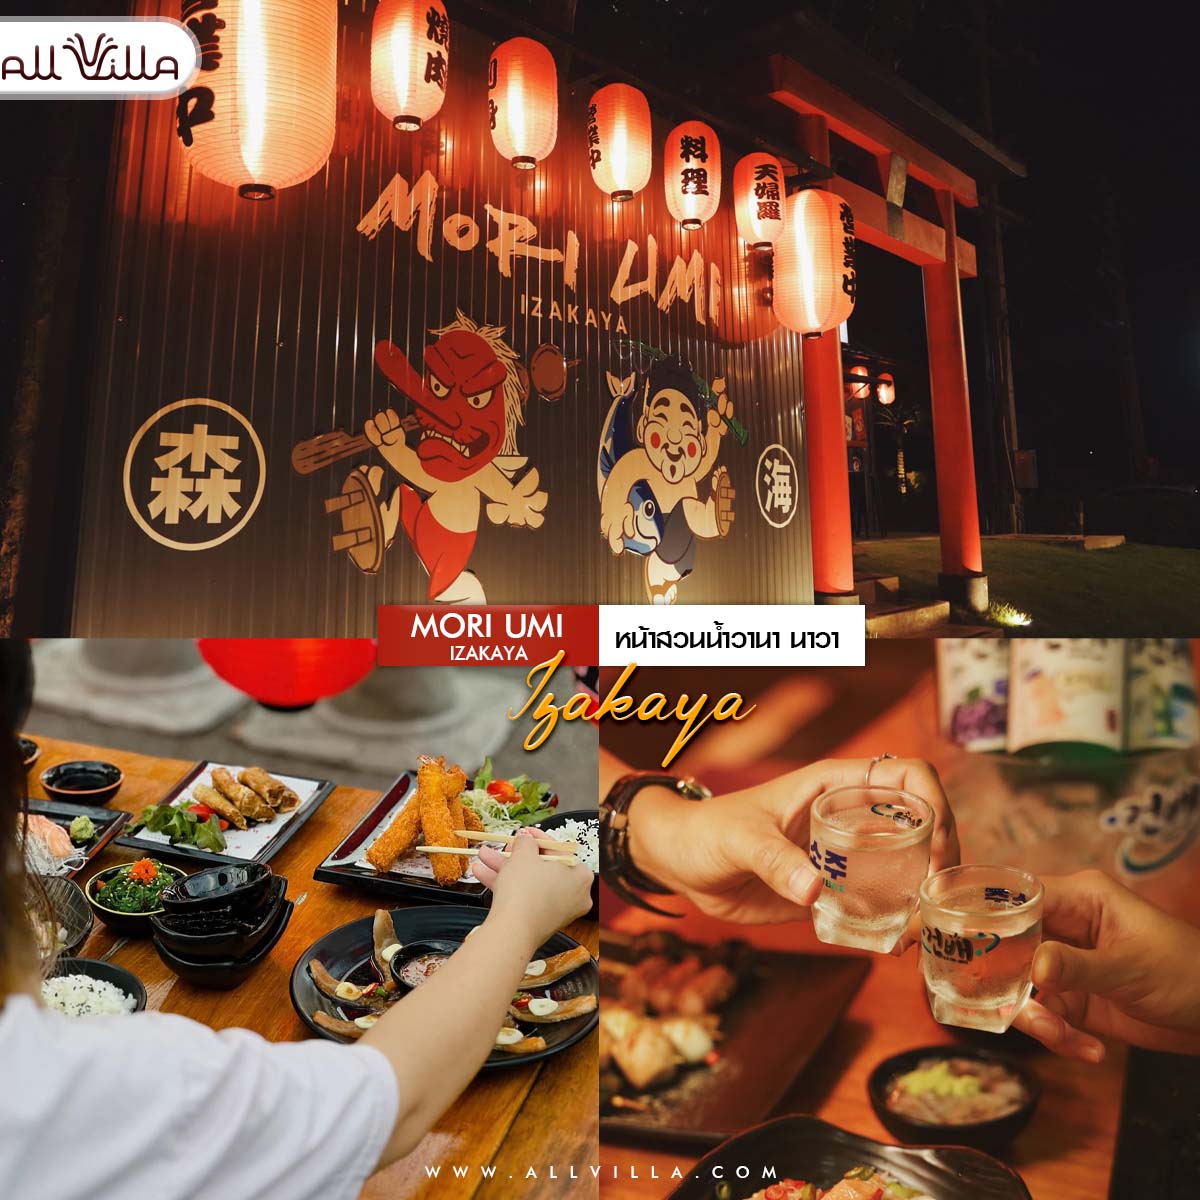 Mori Umi Izakaya | โมริ อุมิ อิซากายะ ร้านอาหารญี่ปุ่น